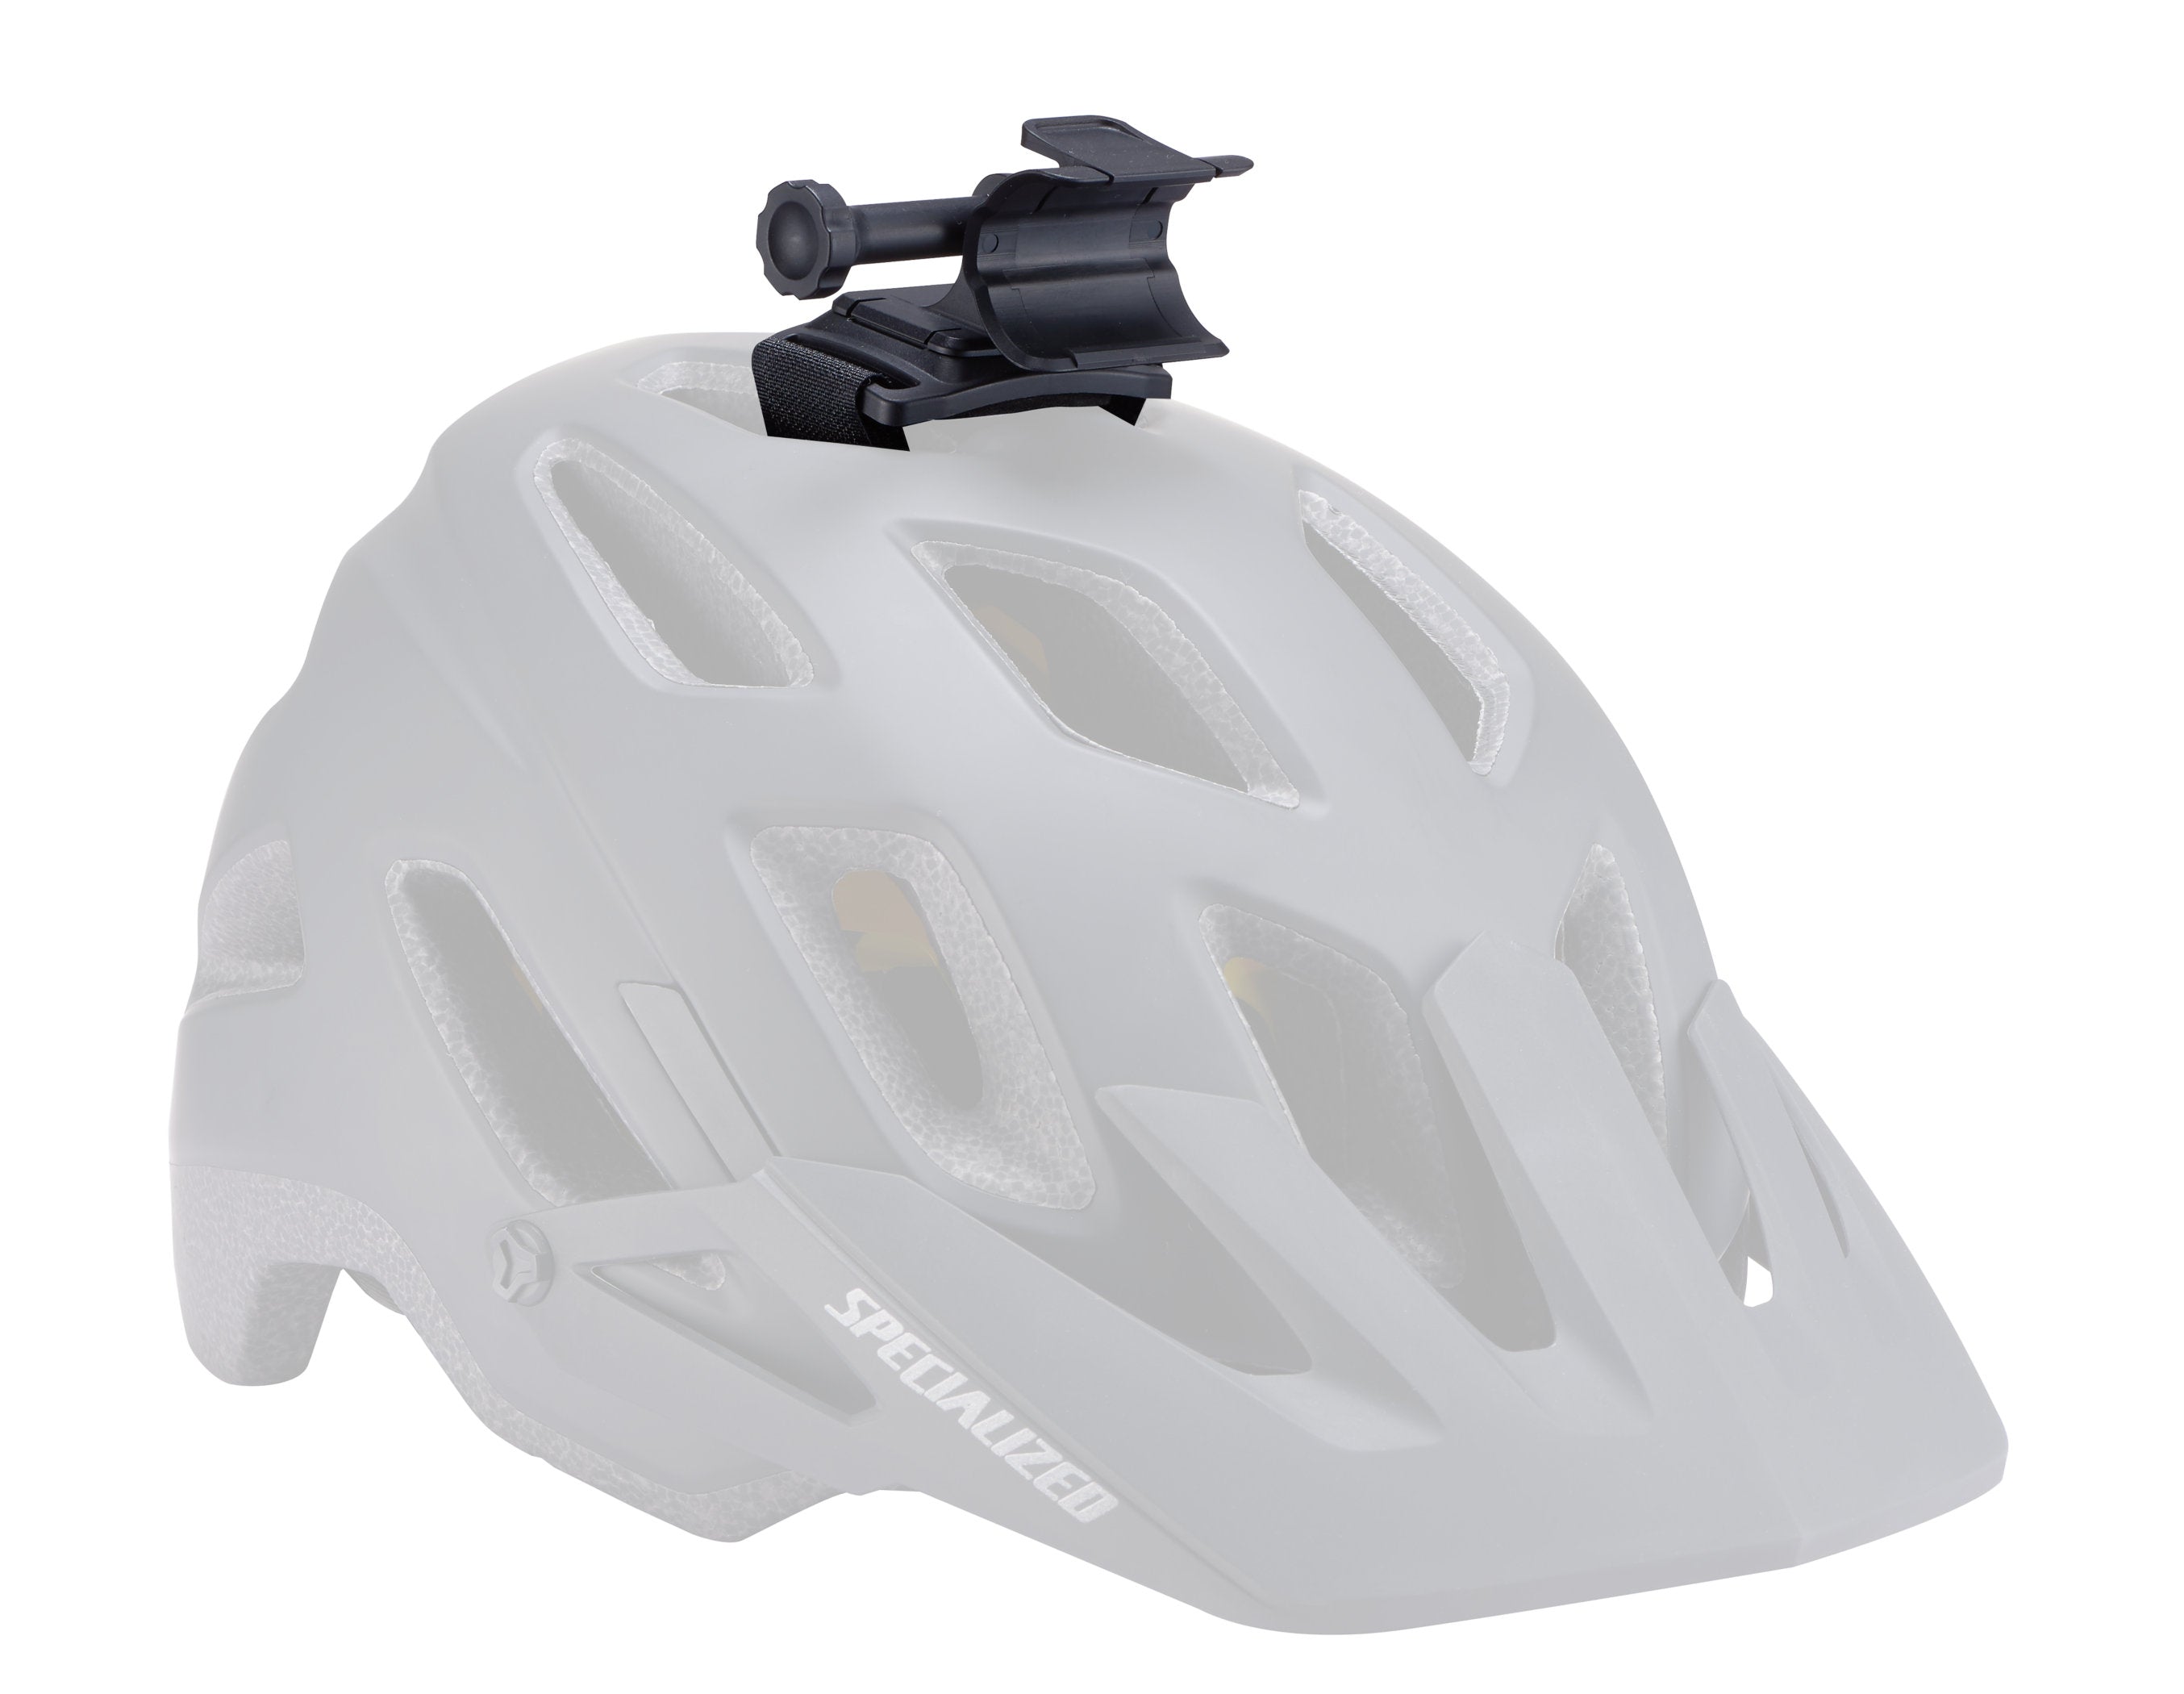 Specialized Flux 900/1200 Headlight Helmet Mount